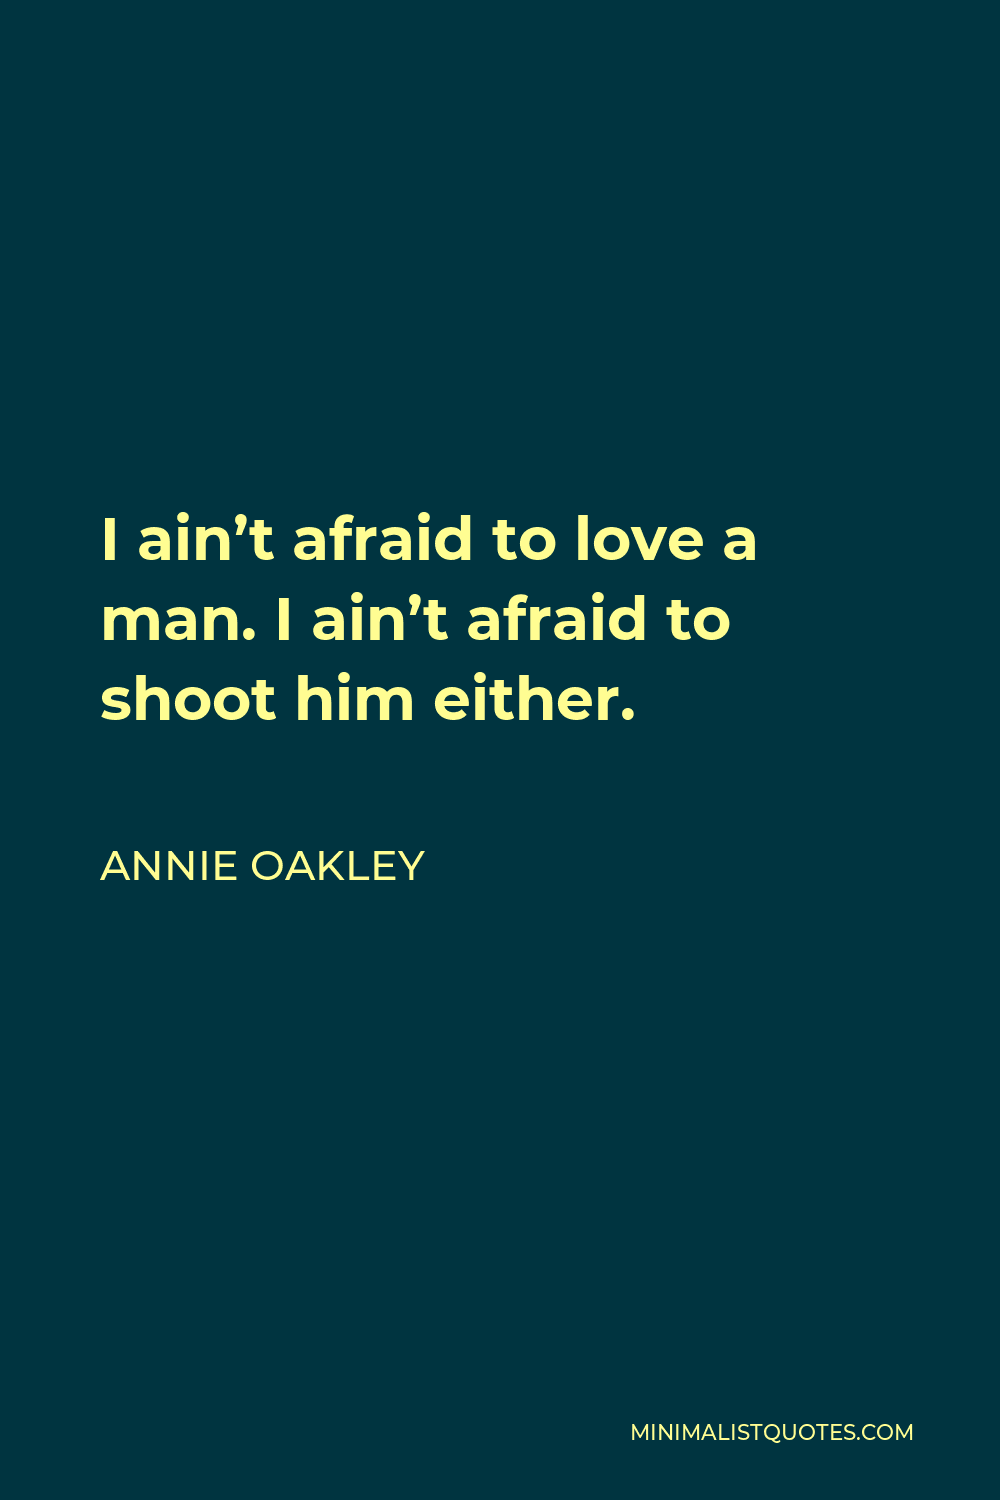 Annie Oakley Quote: I ain't afraid to love a man. I ain't afraid to shoot  him either.